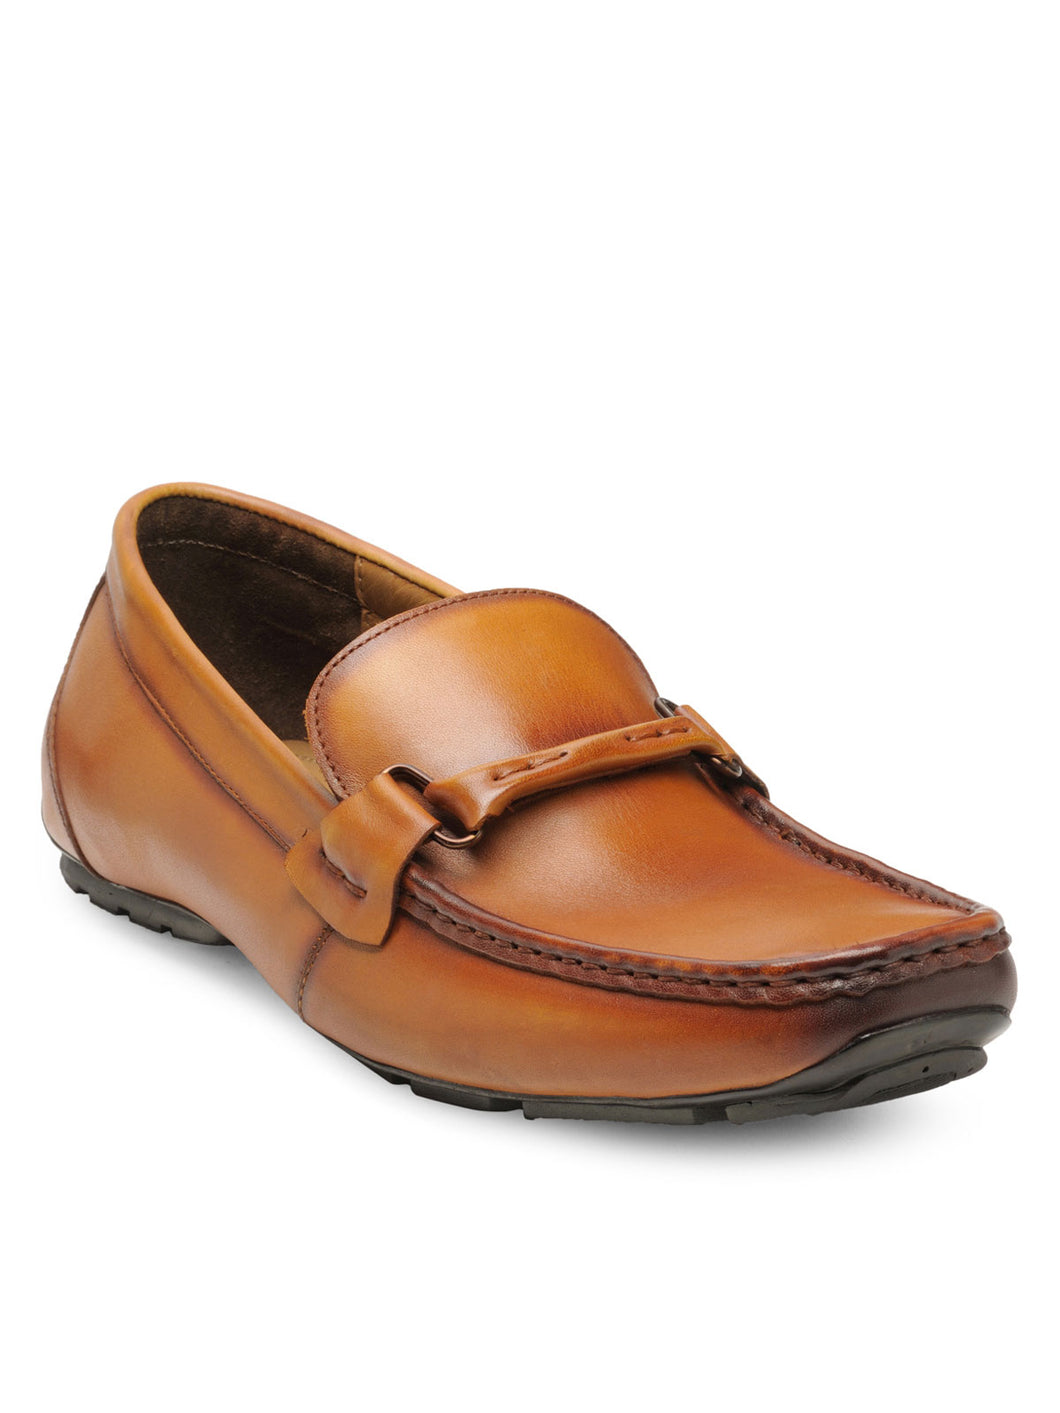 Teakwood Leather Men's Tan Slip-ons Shoes